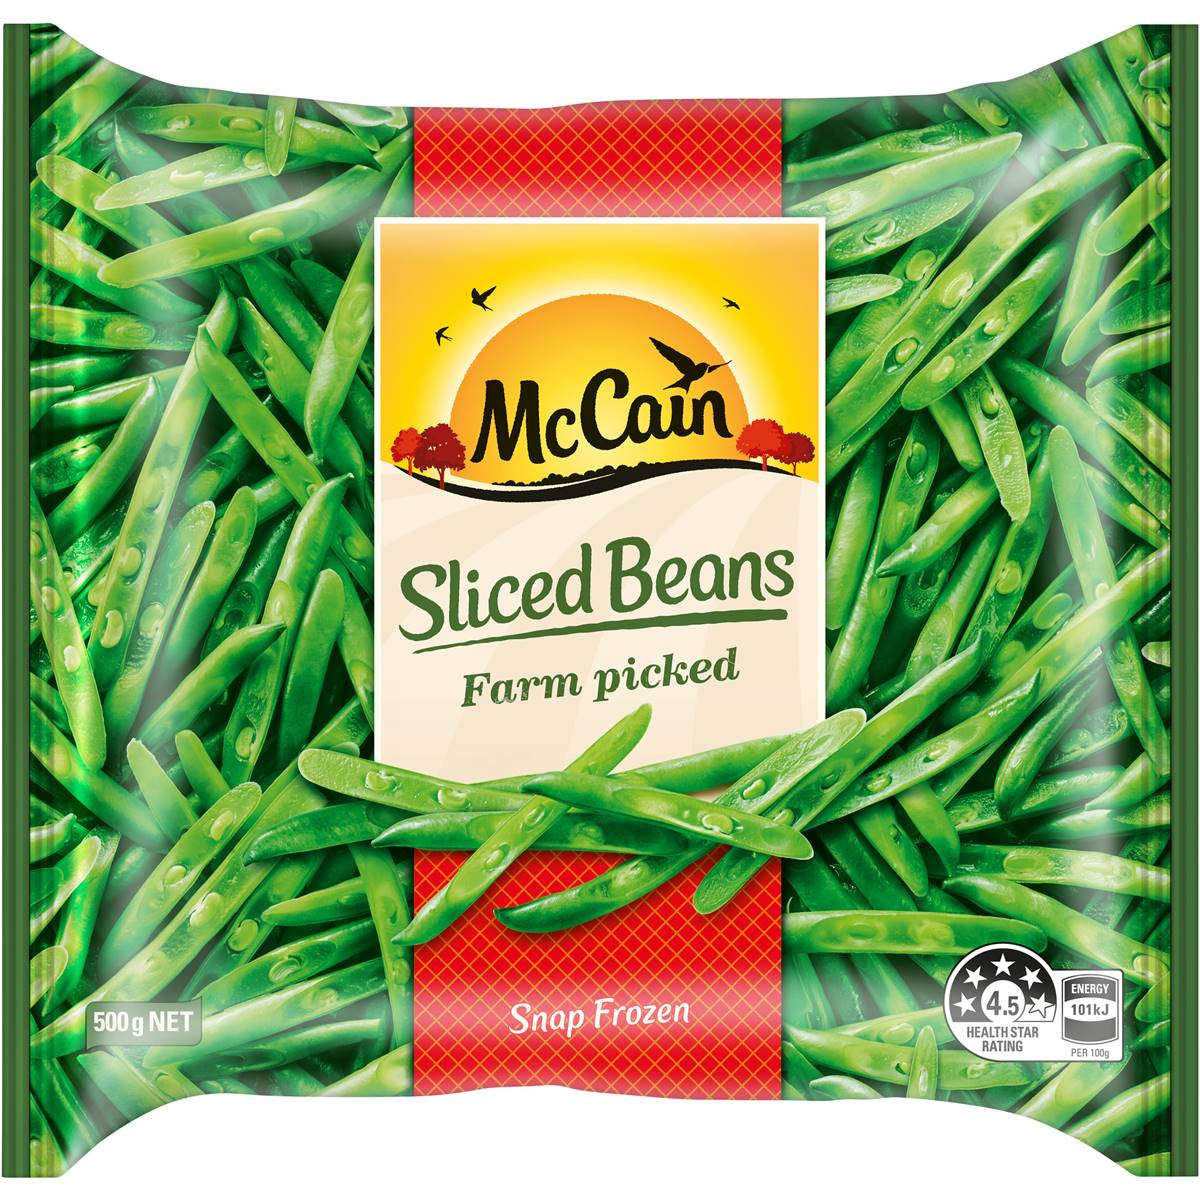 Calories in Mccain Sliced Beans Sliced